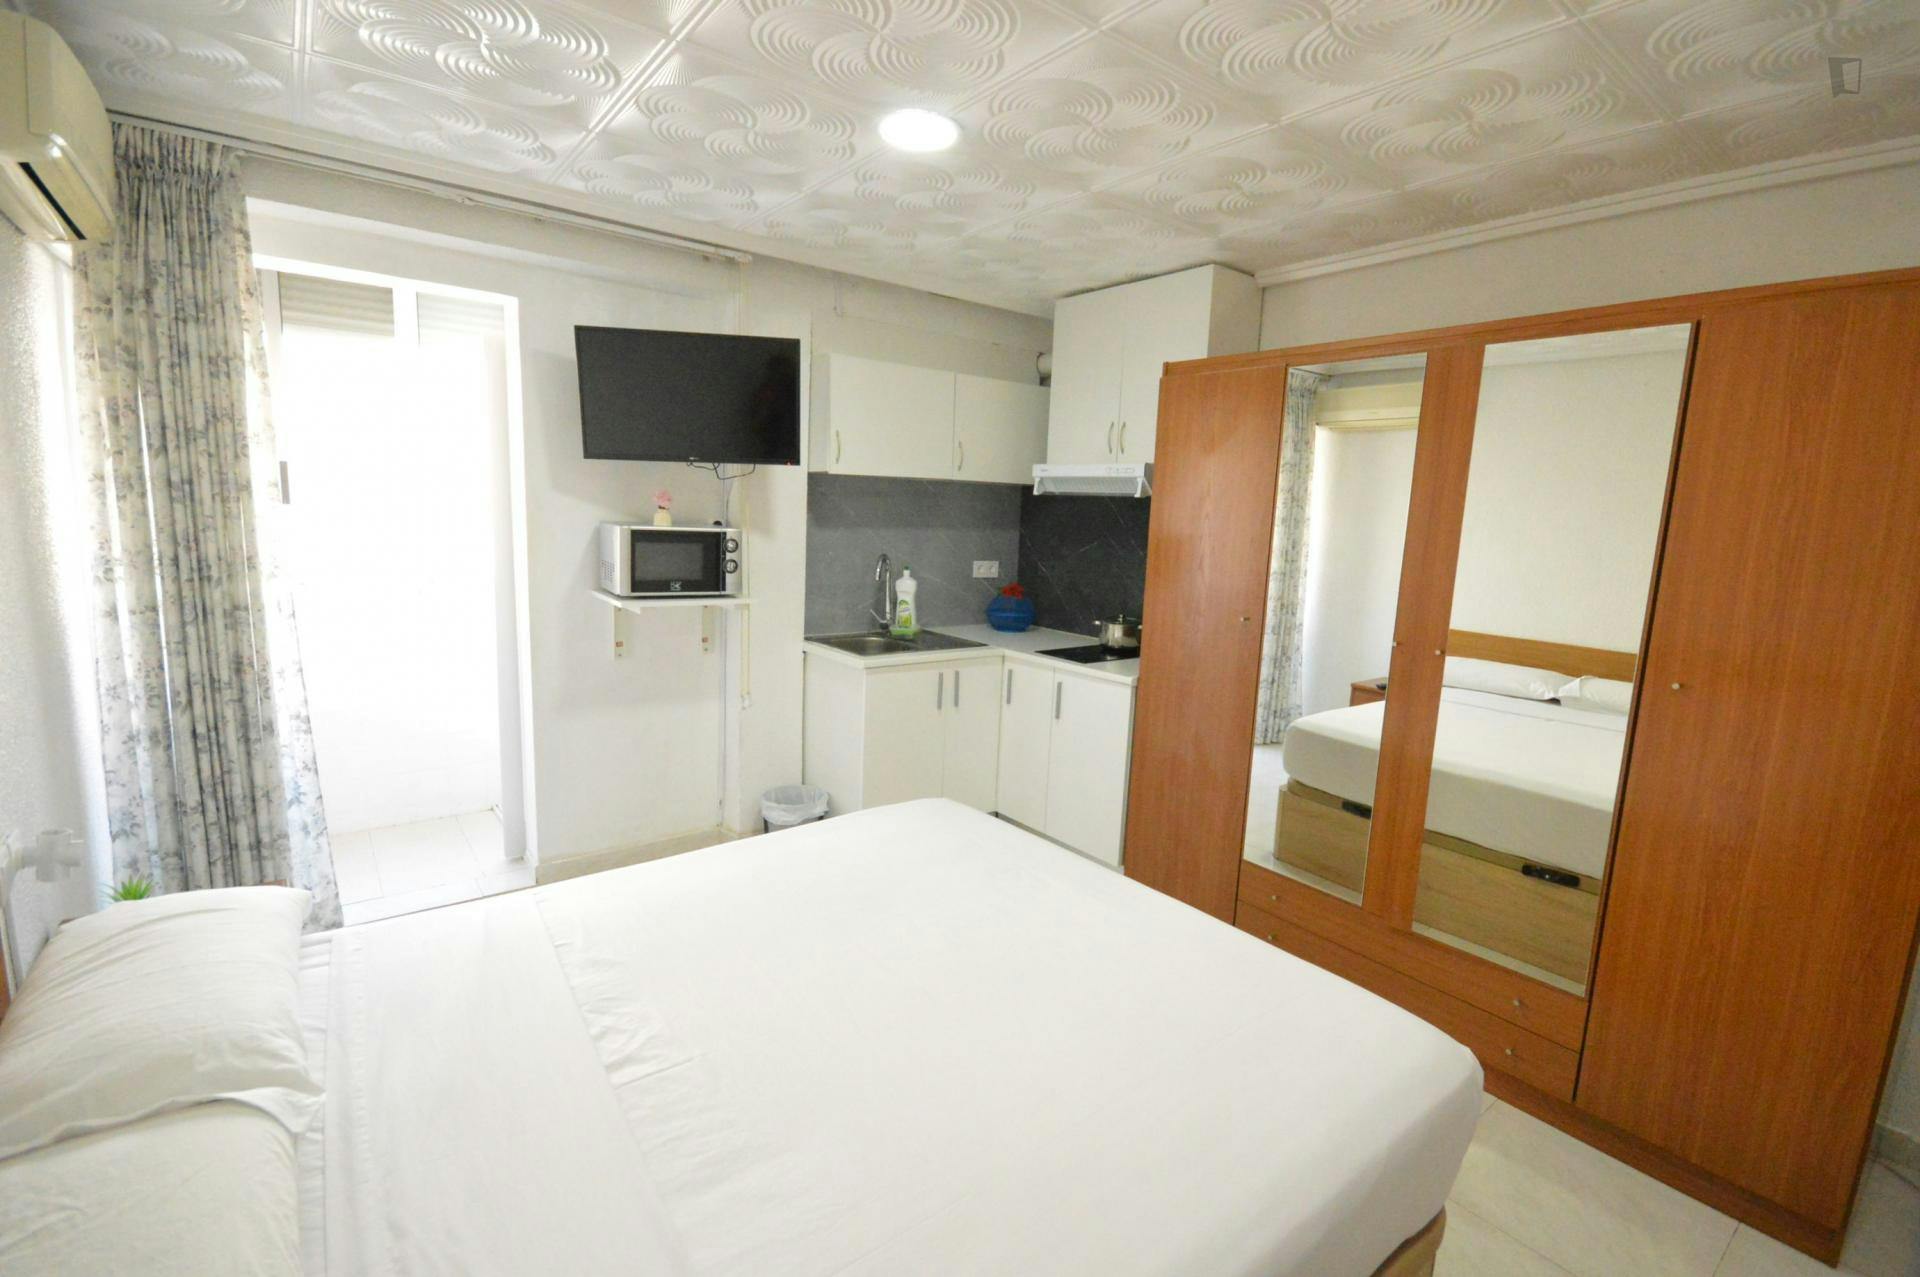 Nice single ensuite bedroom in a 4-bedroom apartment near Amistat-Casa de Salud metro station